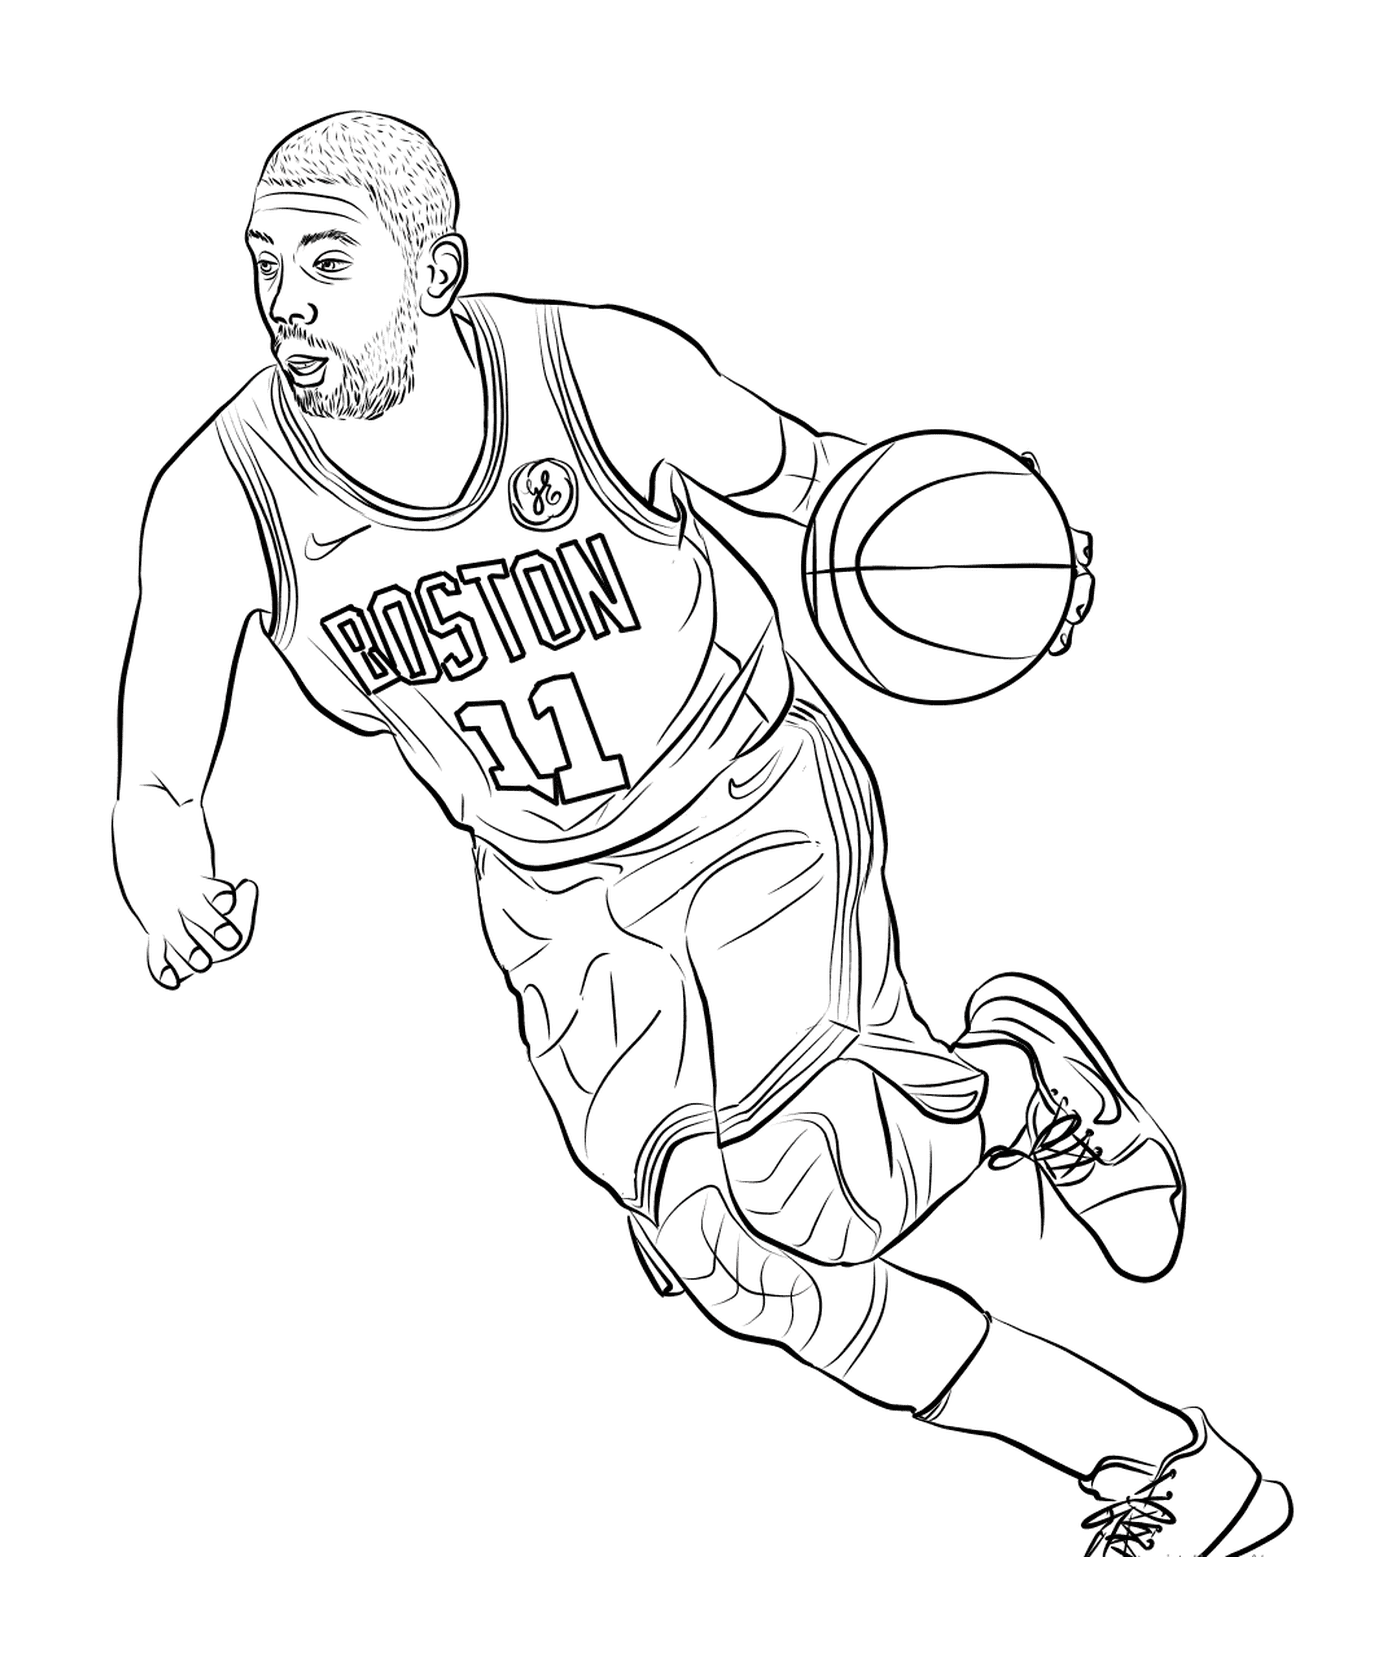  Kyrie Irving plays basketball 